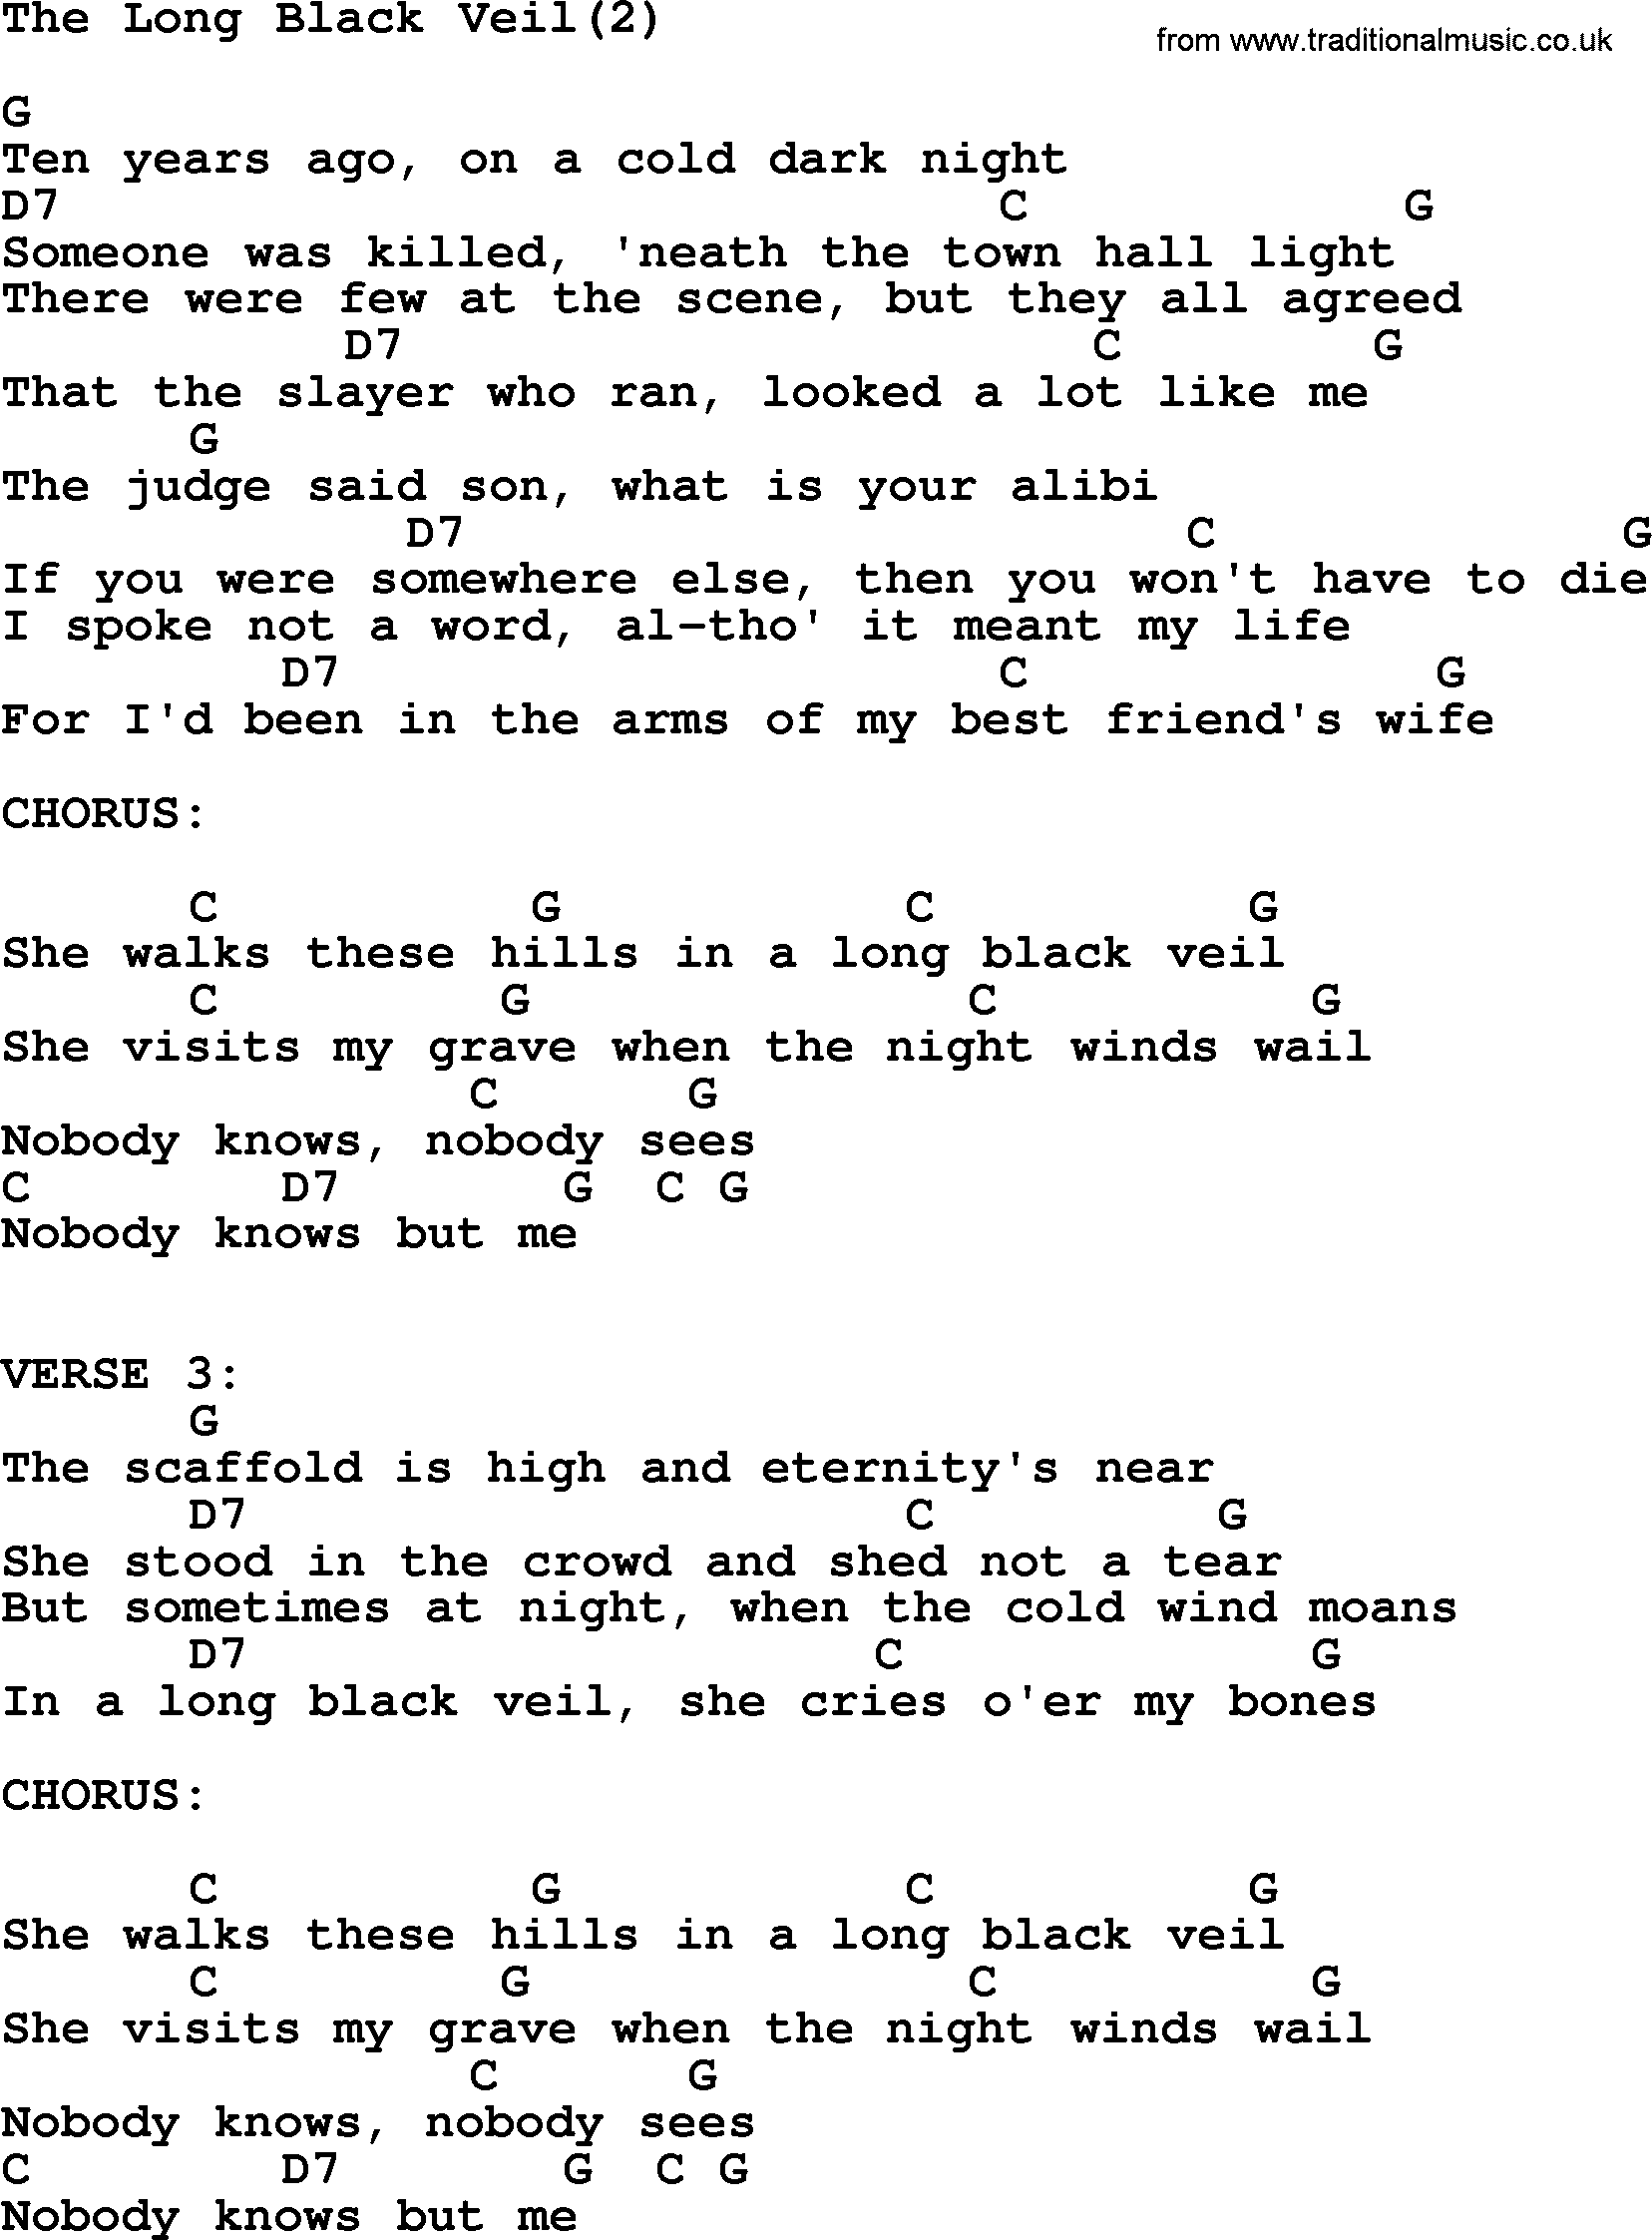 Johnny Cash song The Long Black Veil(2), lyrics and chords